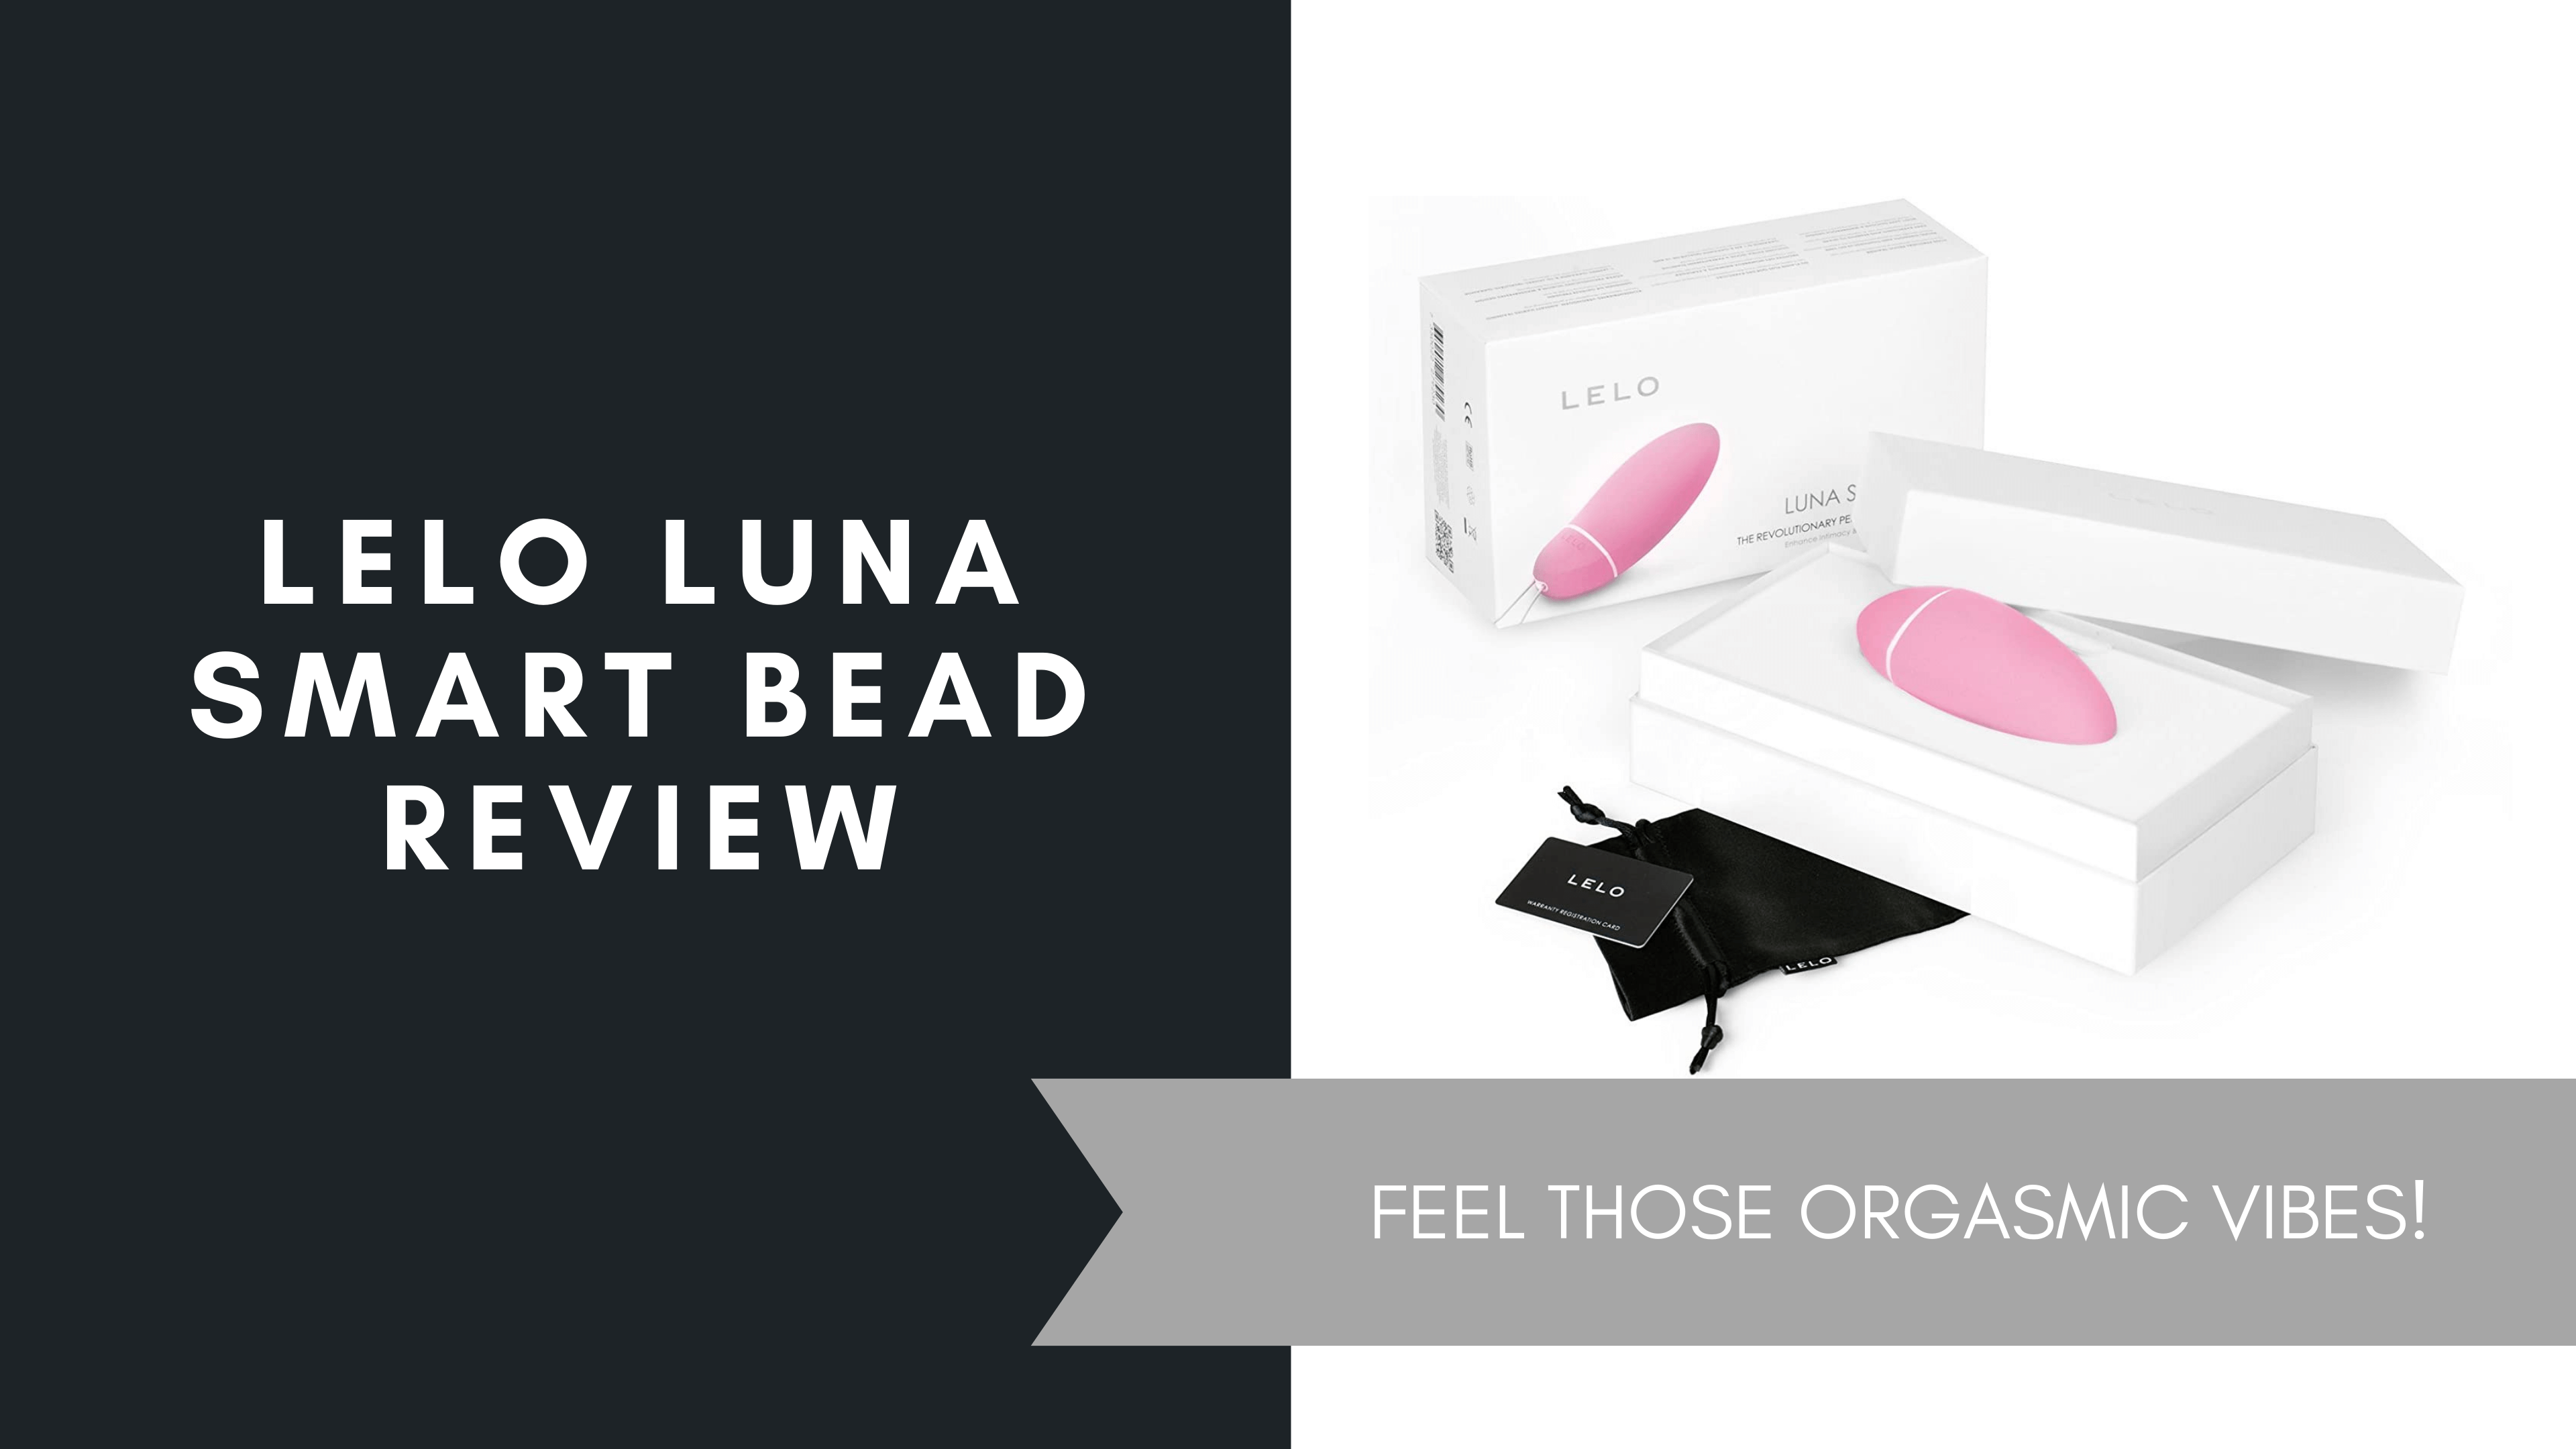 Lelo Luna Smart Bead Review, June 2021